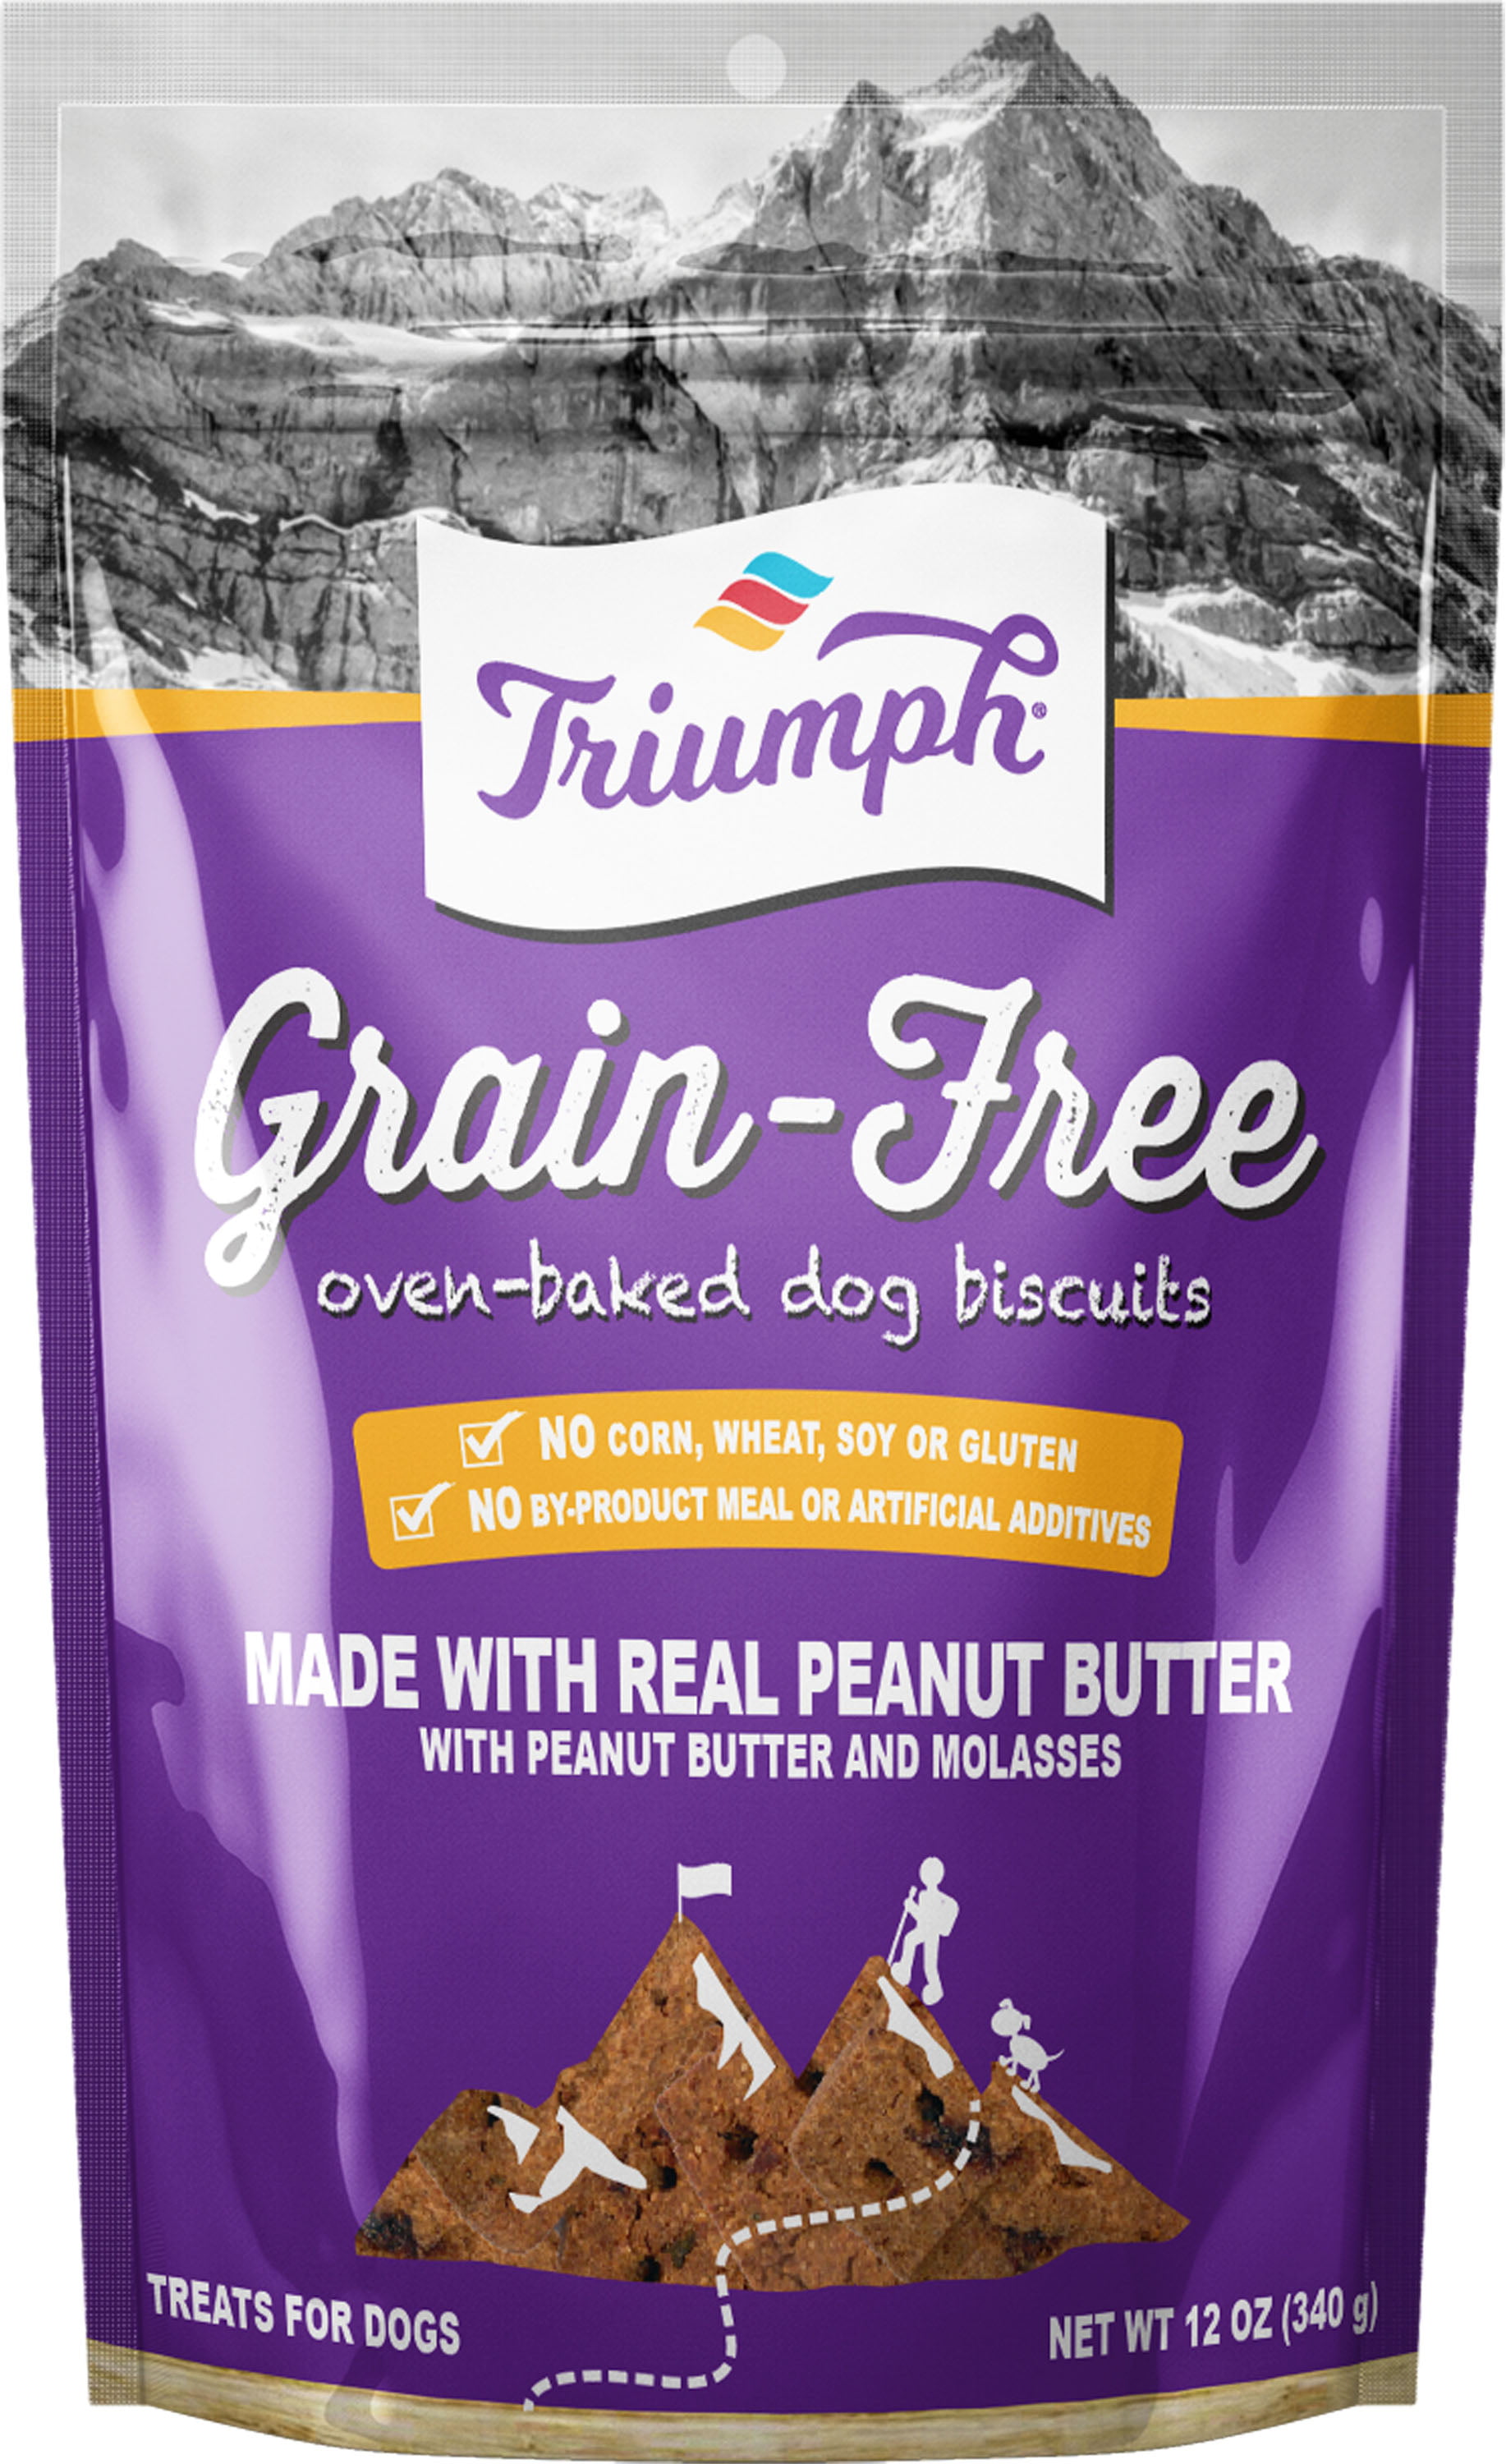 TRIUMPH GRAIN FREE DOG BISCUITS - Walmart.com